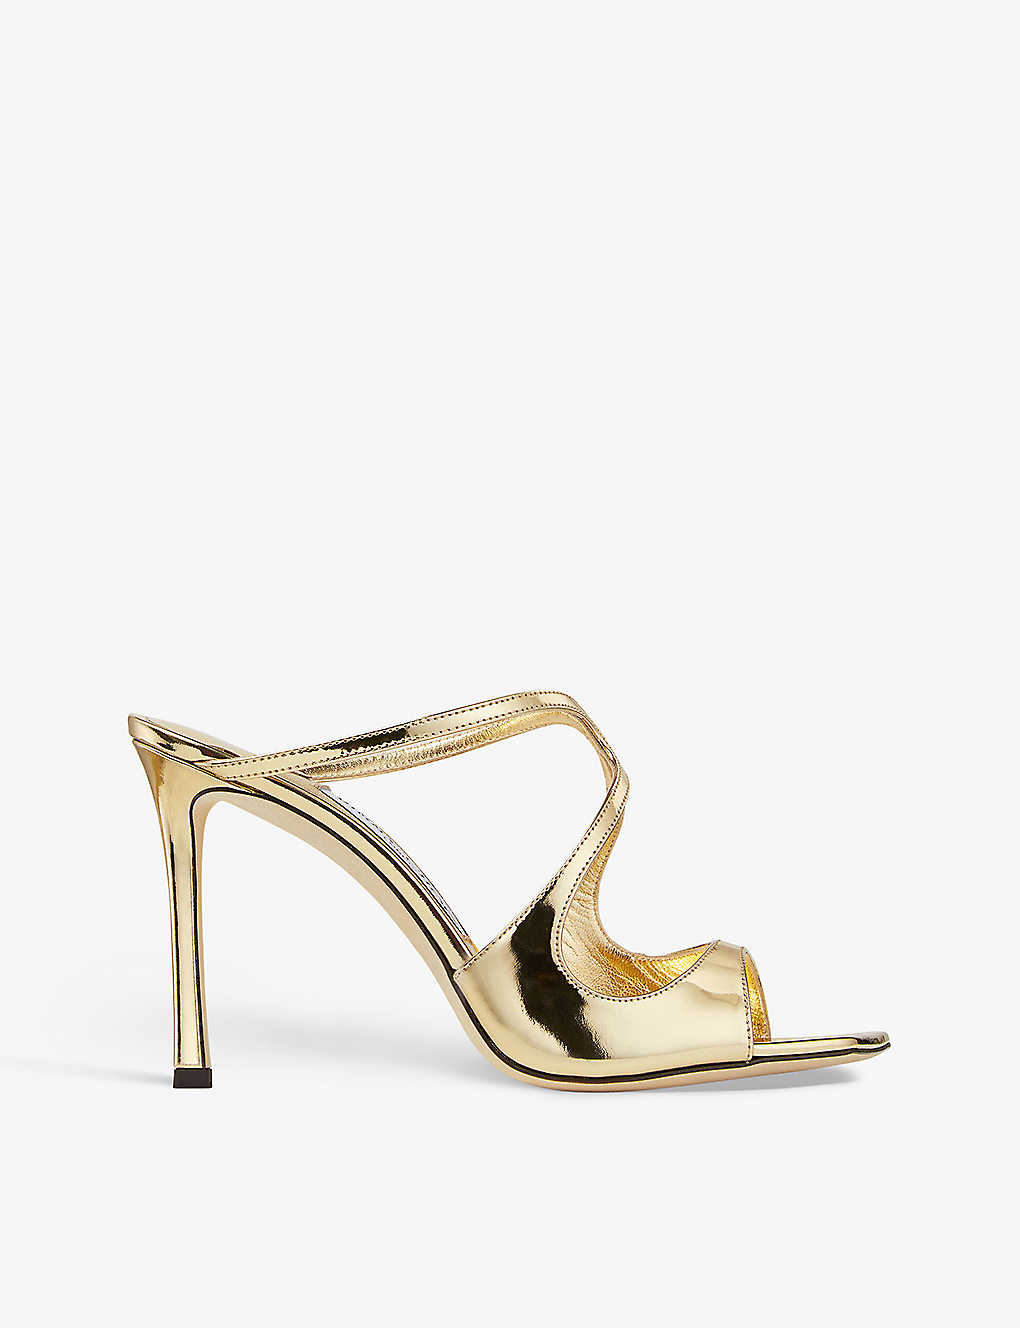 Shop Jimmy Choo Women's Gold Anise 95 Liquid-gold Leather Heeled Sandals